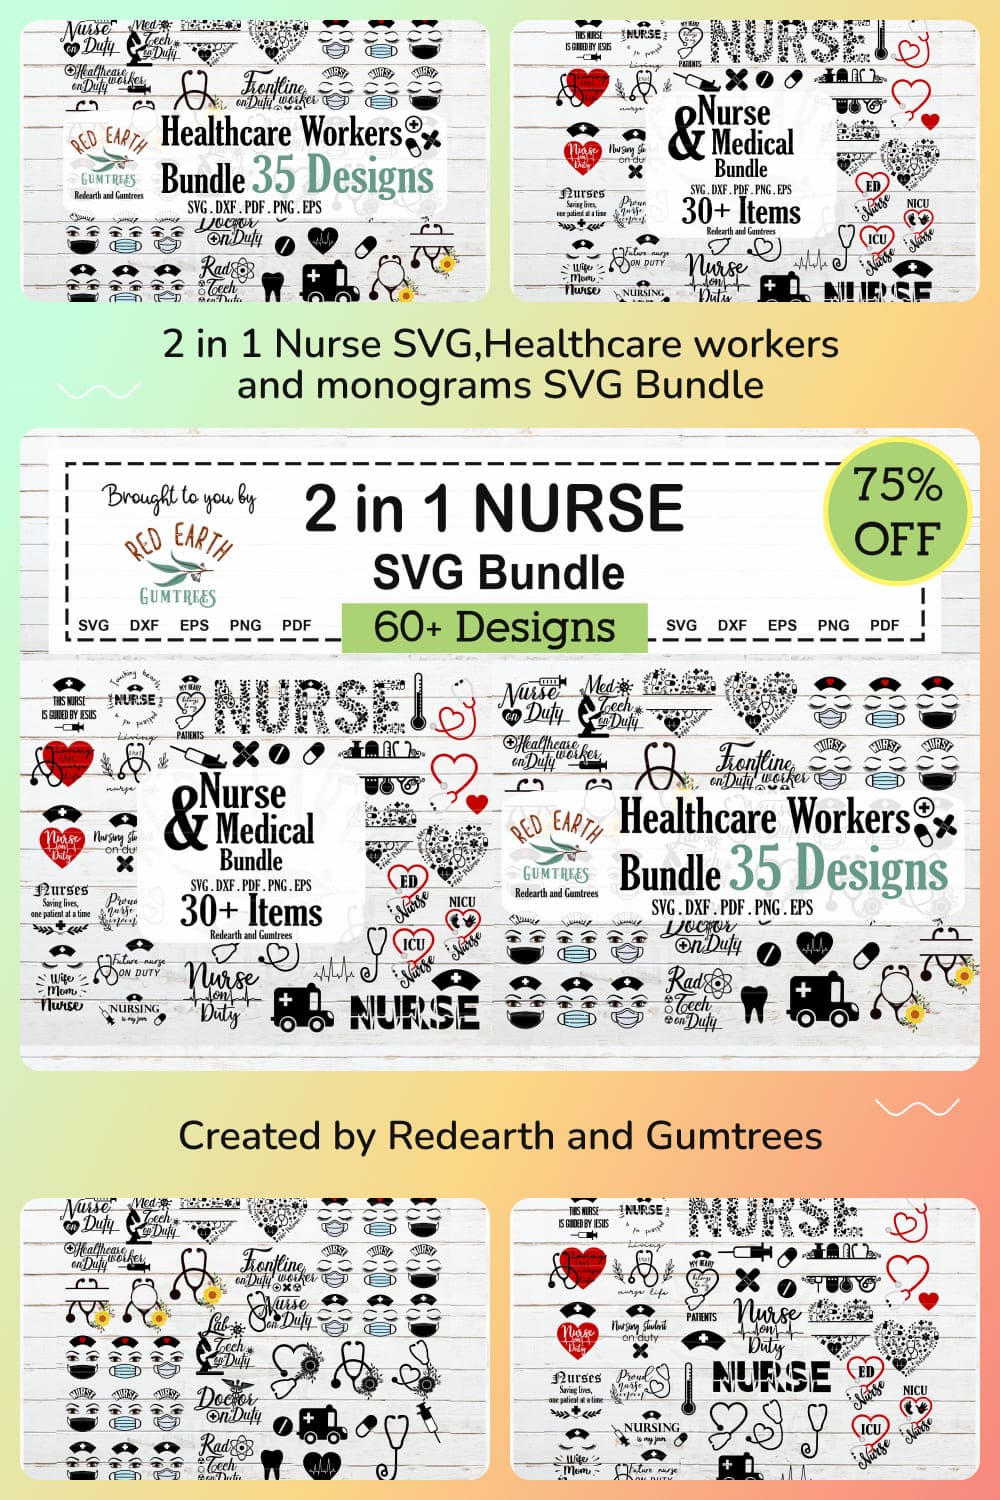 2 in 1 Nurse SVG, Healthcare Workers and Monograms SVG Bundle.